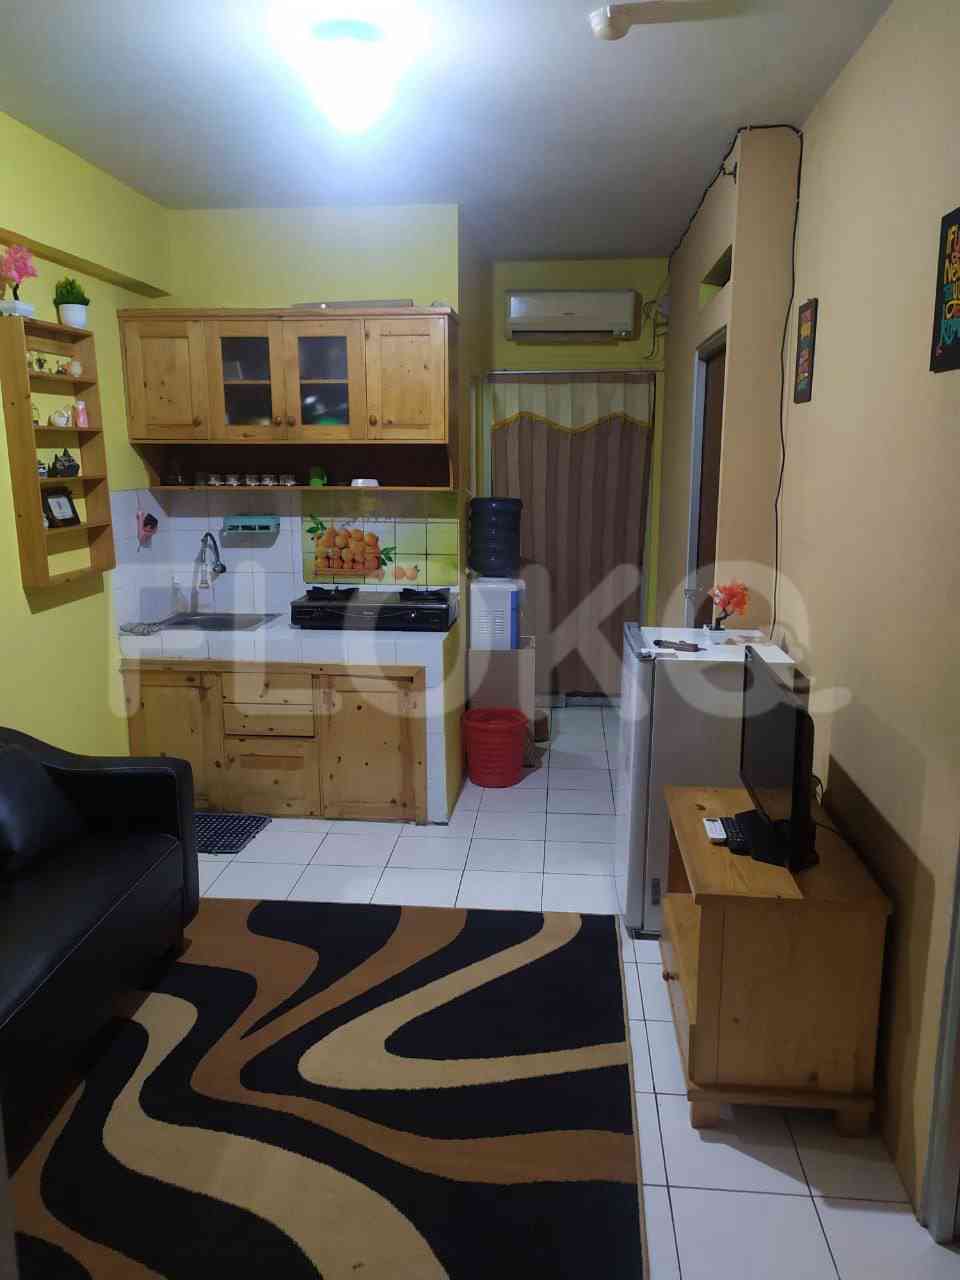 2 Bedroom on 16th Floor for Rent in Cibubur Village Apartment - fci5e0 1